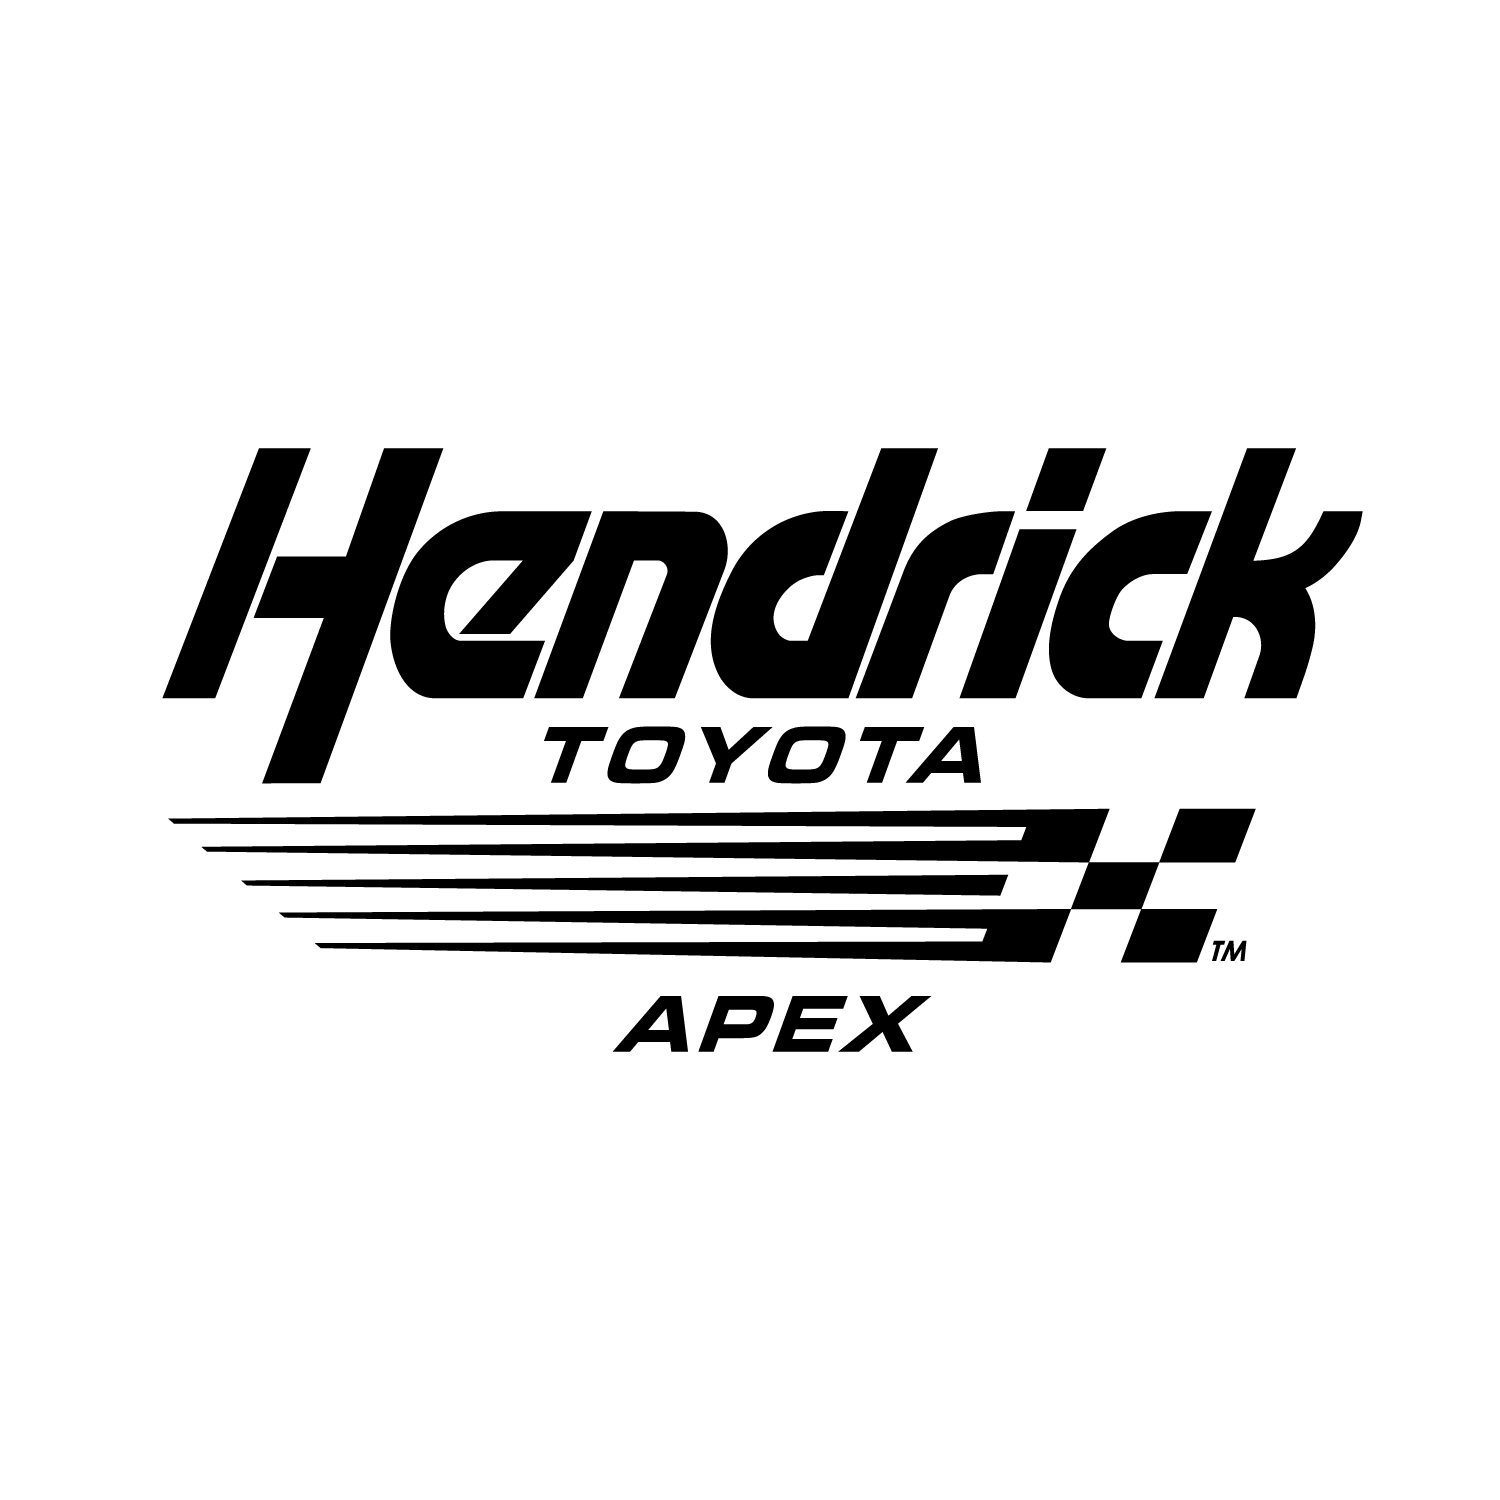 Hendrick Toyota Apex Photo